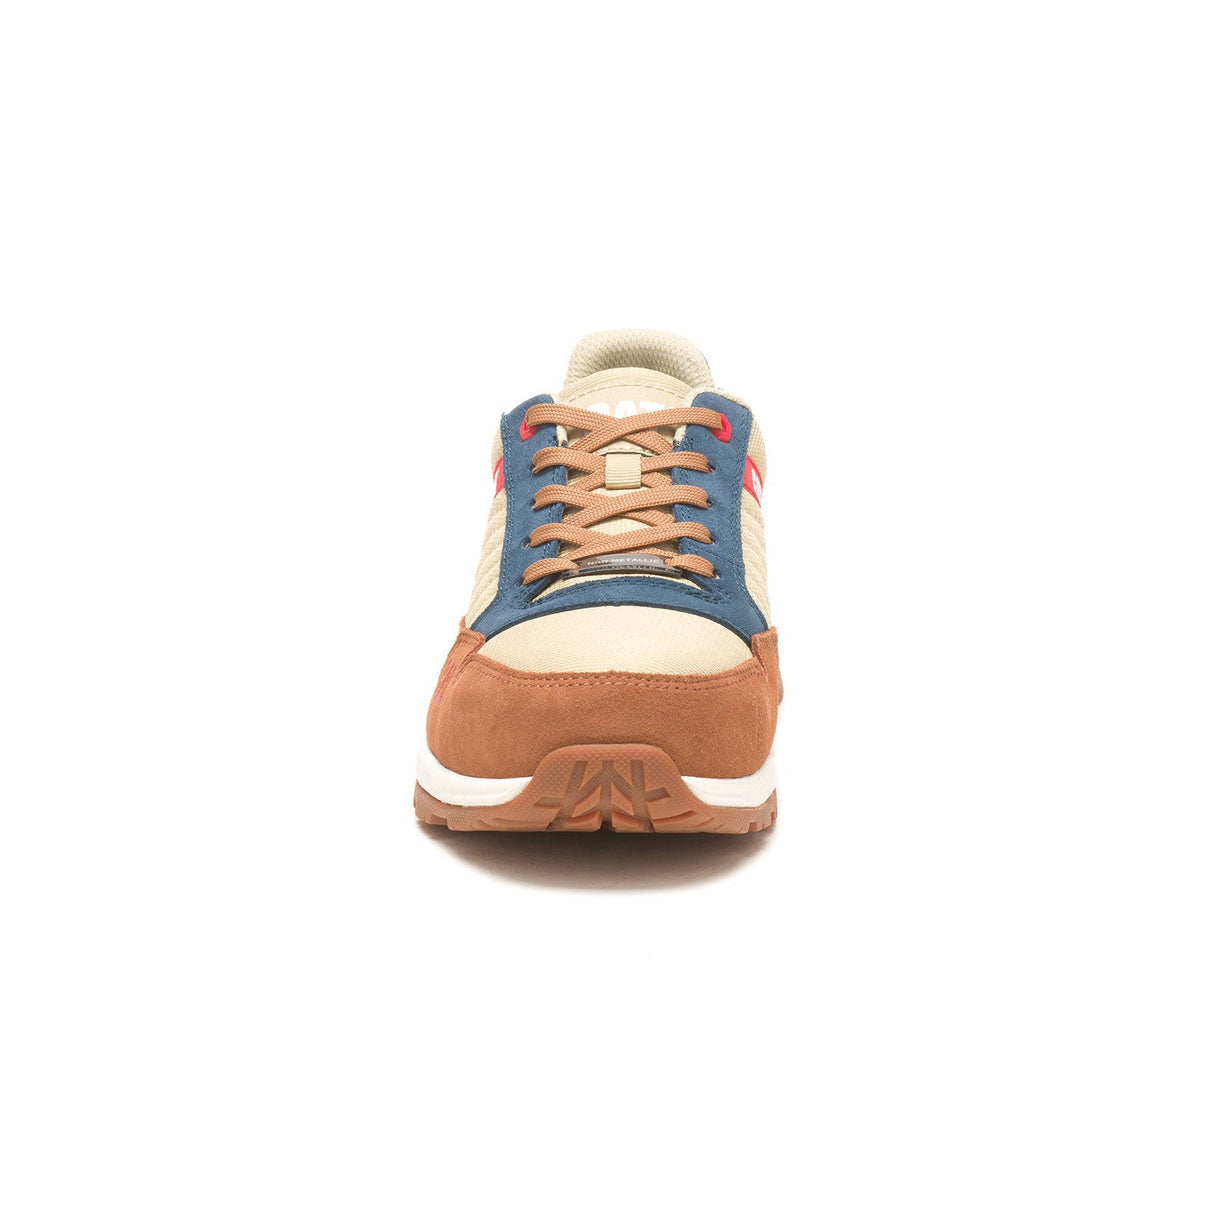 Caterpillar Venward Men's Composite-Toe Work Shoes P91478-3